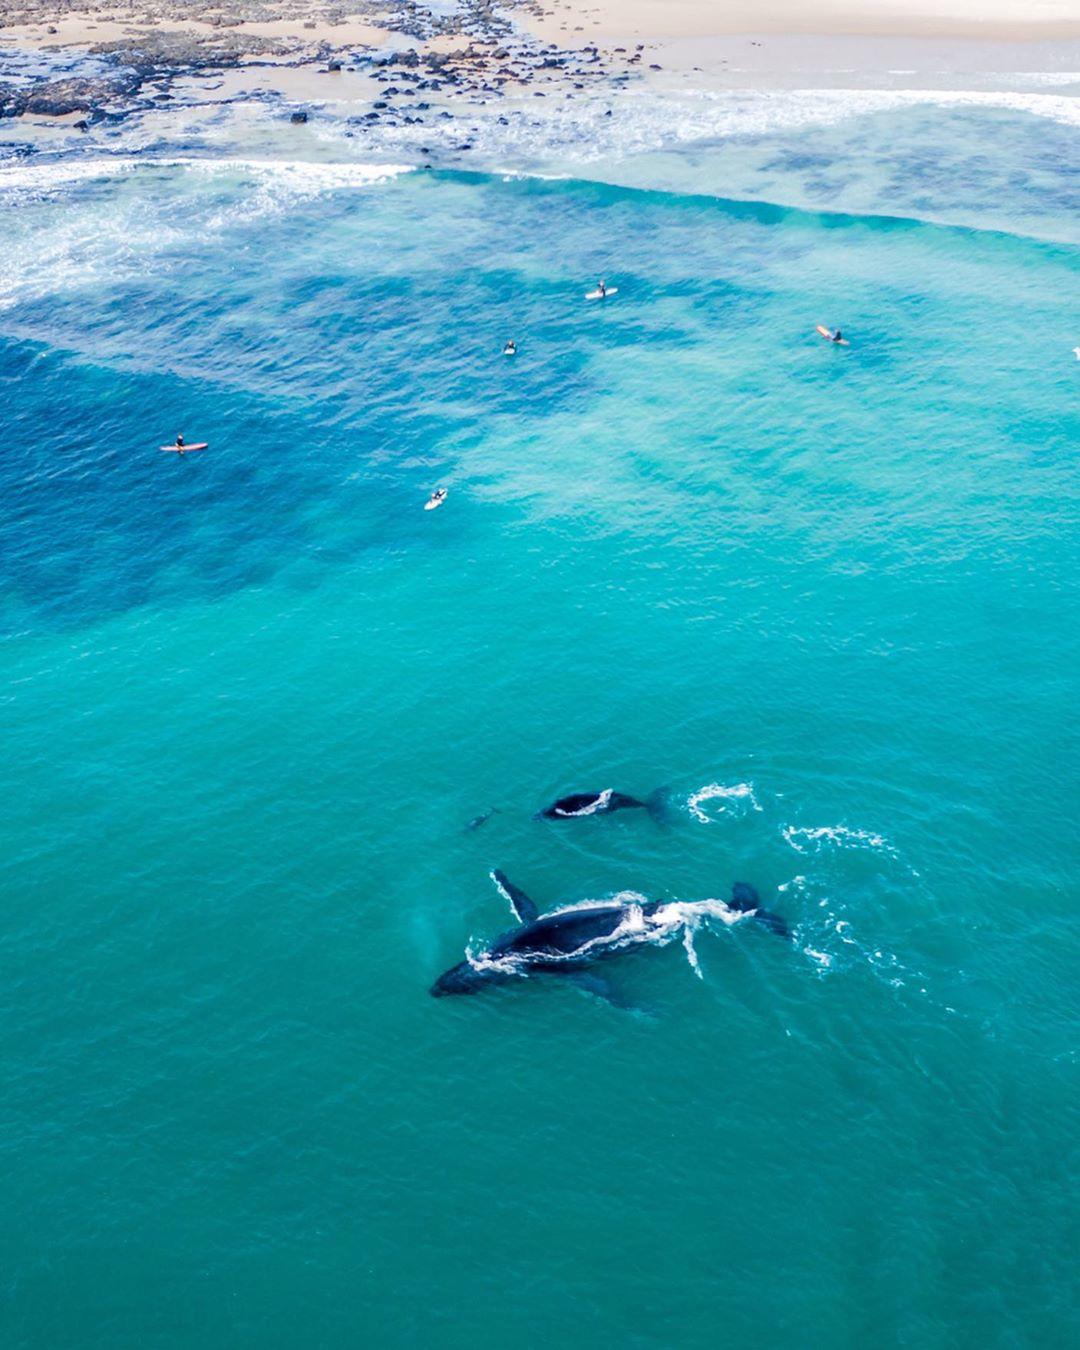  座头鲸与游人，来自摄影师Catfood Taco。 